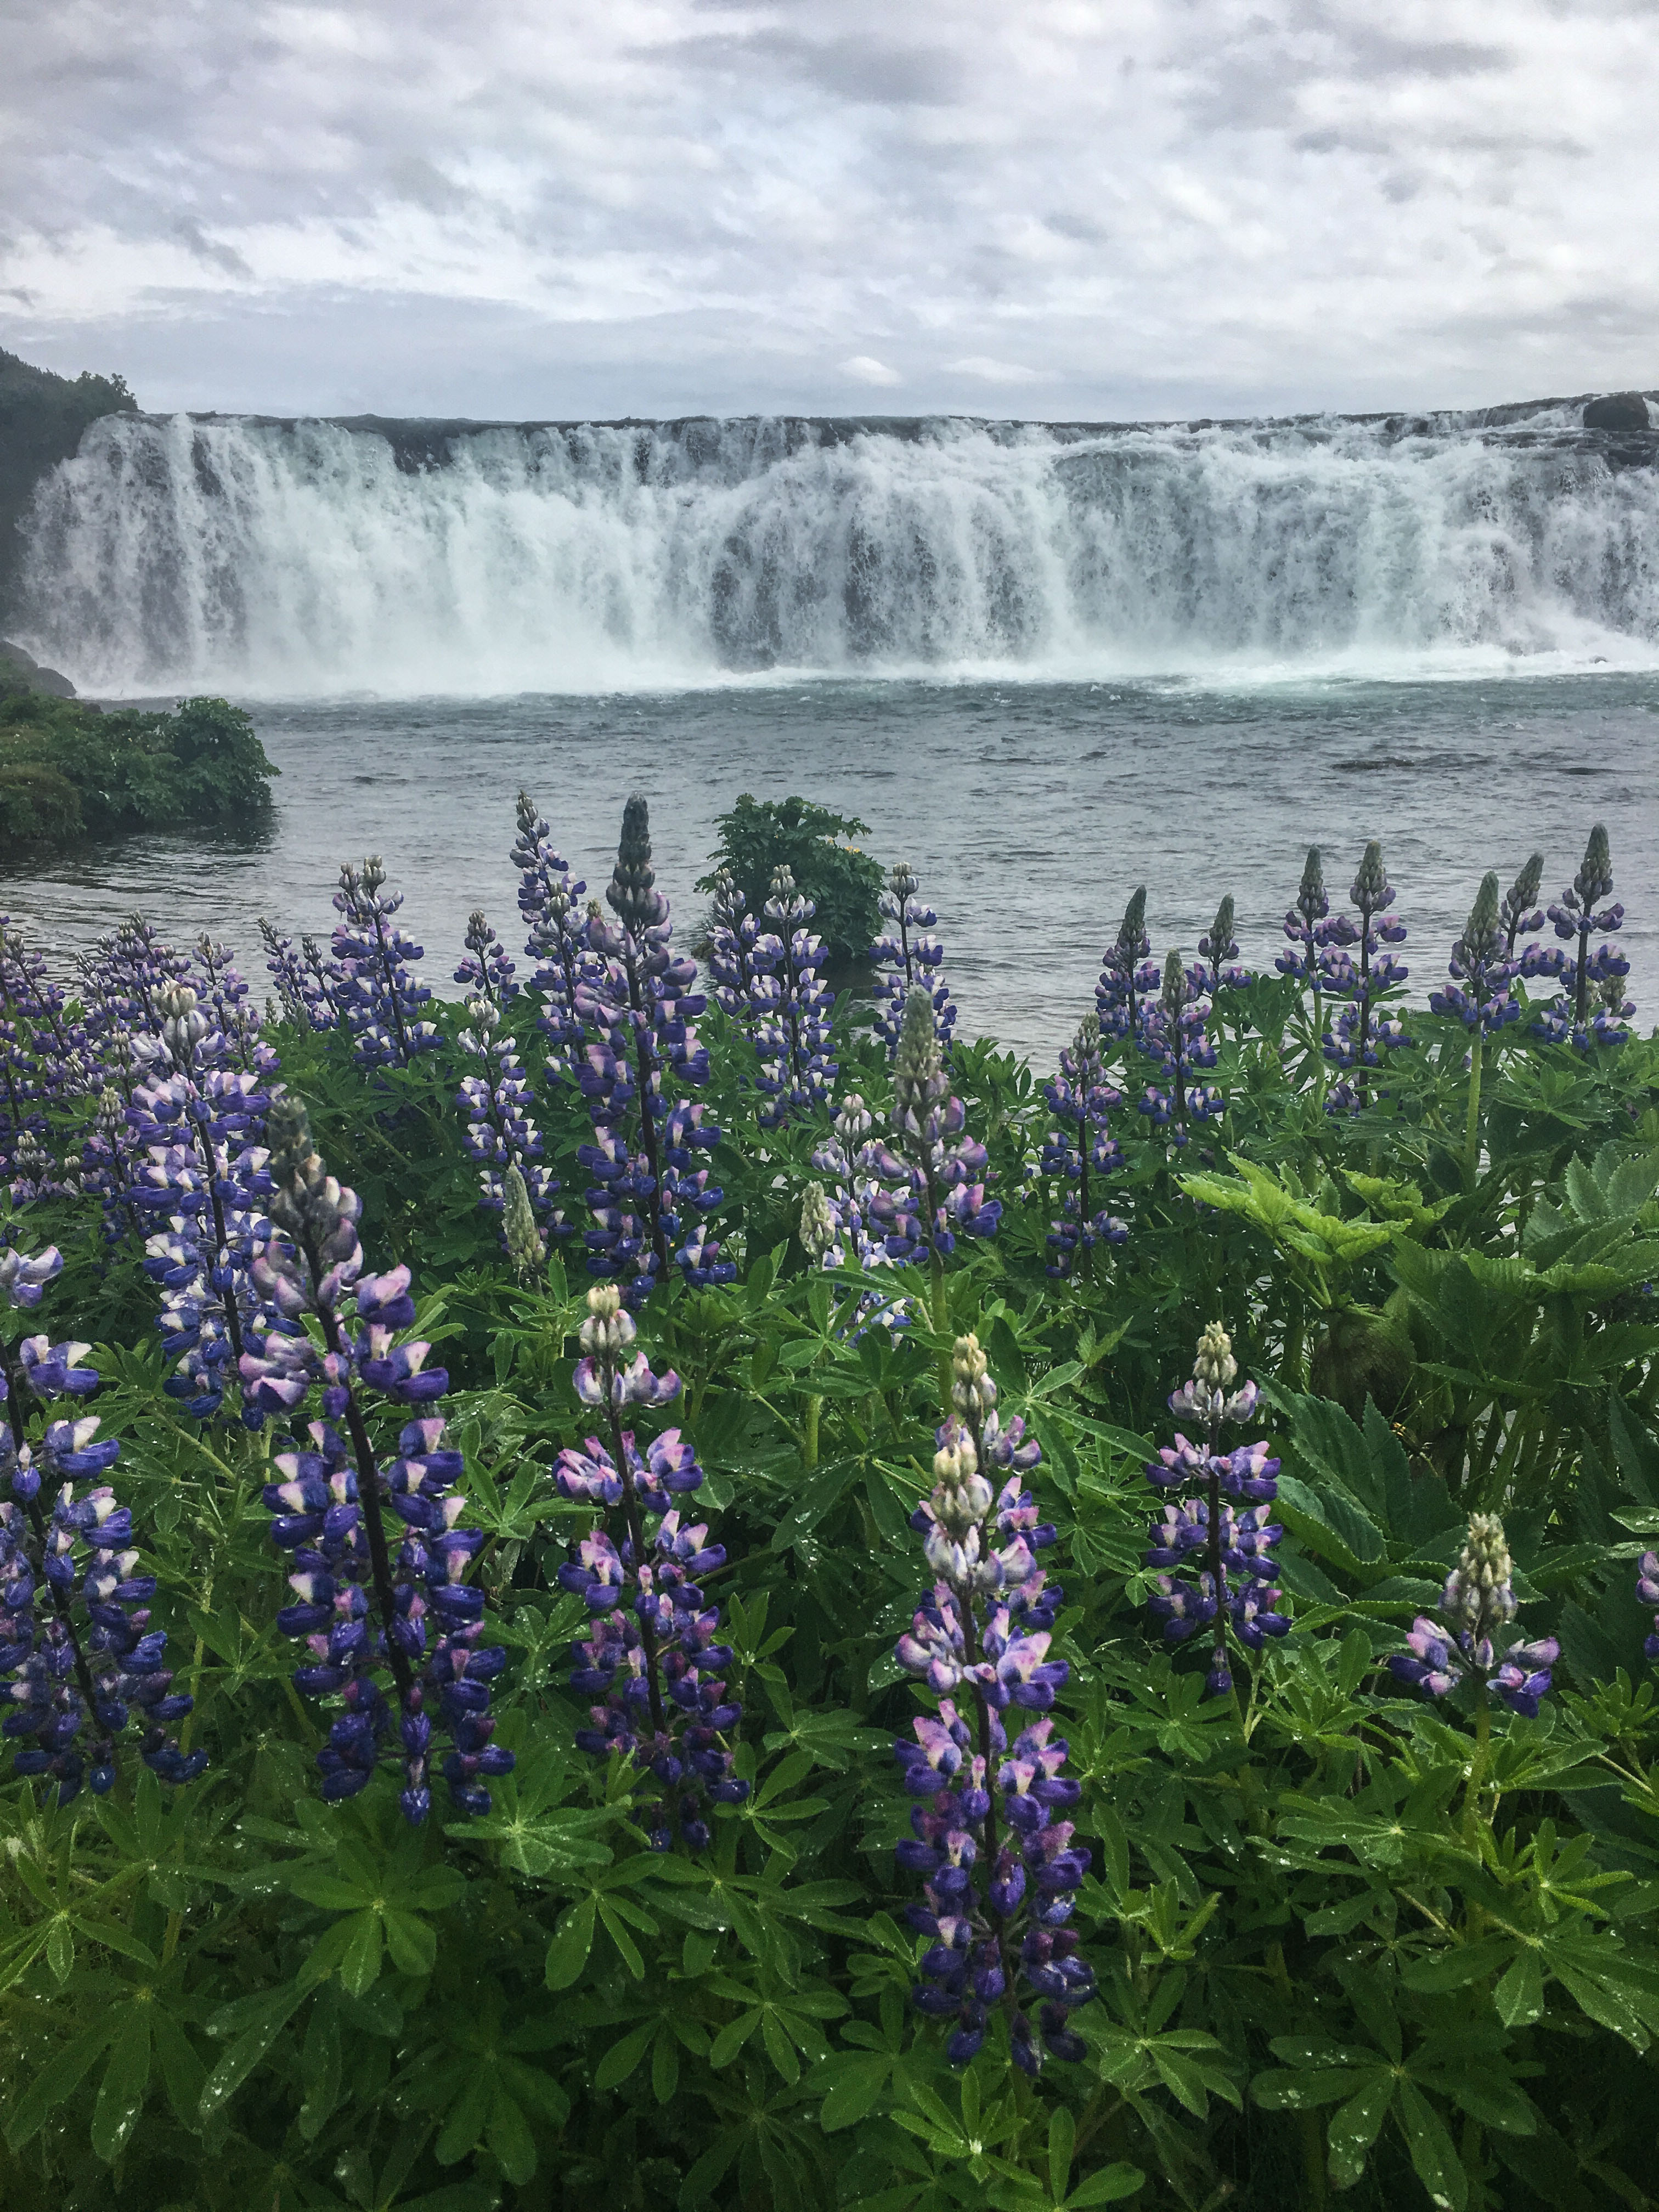 Purple flowers by a waterfall in Iceland